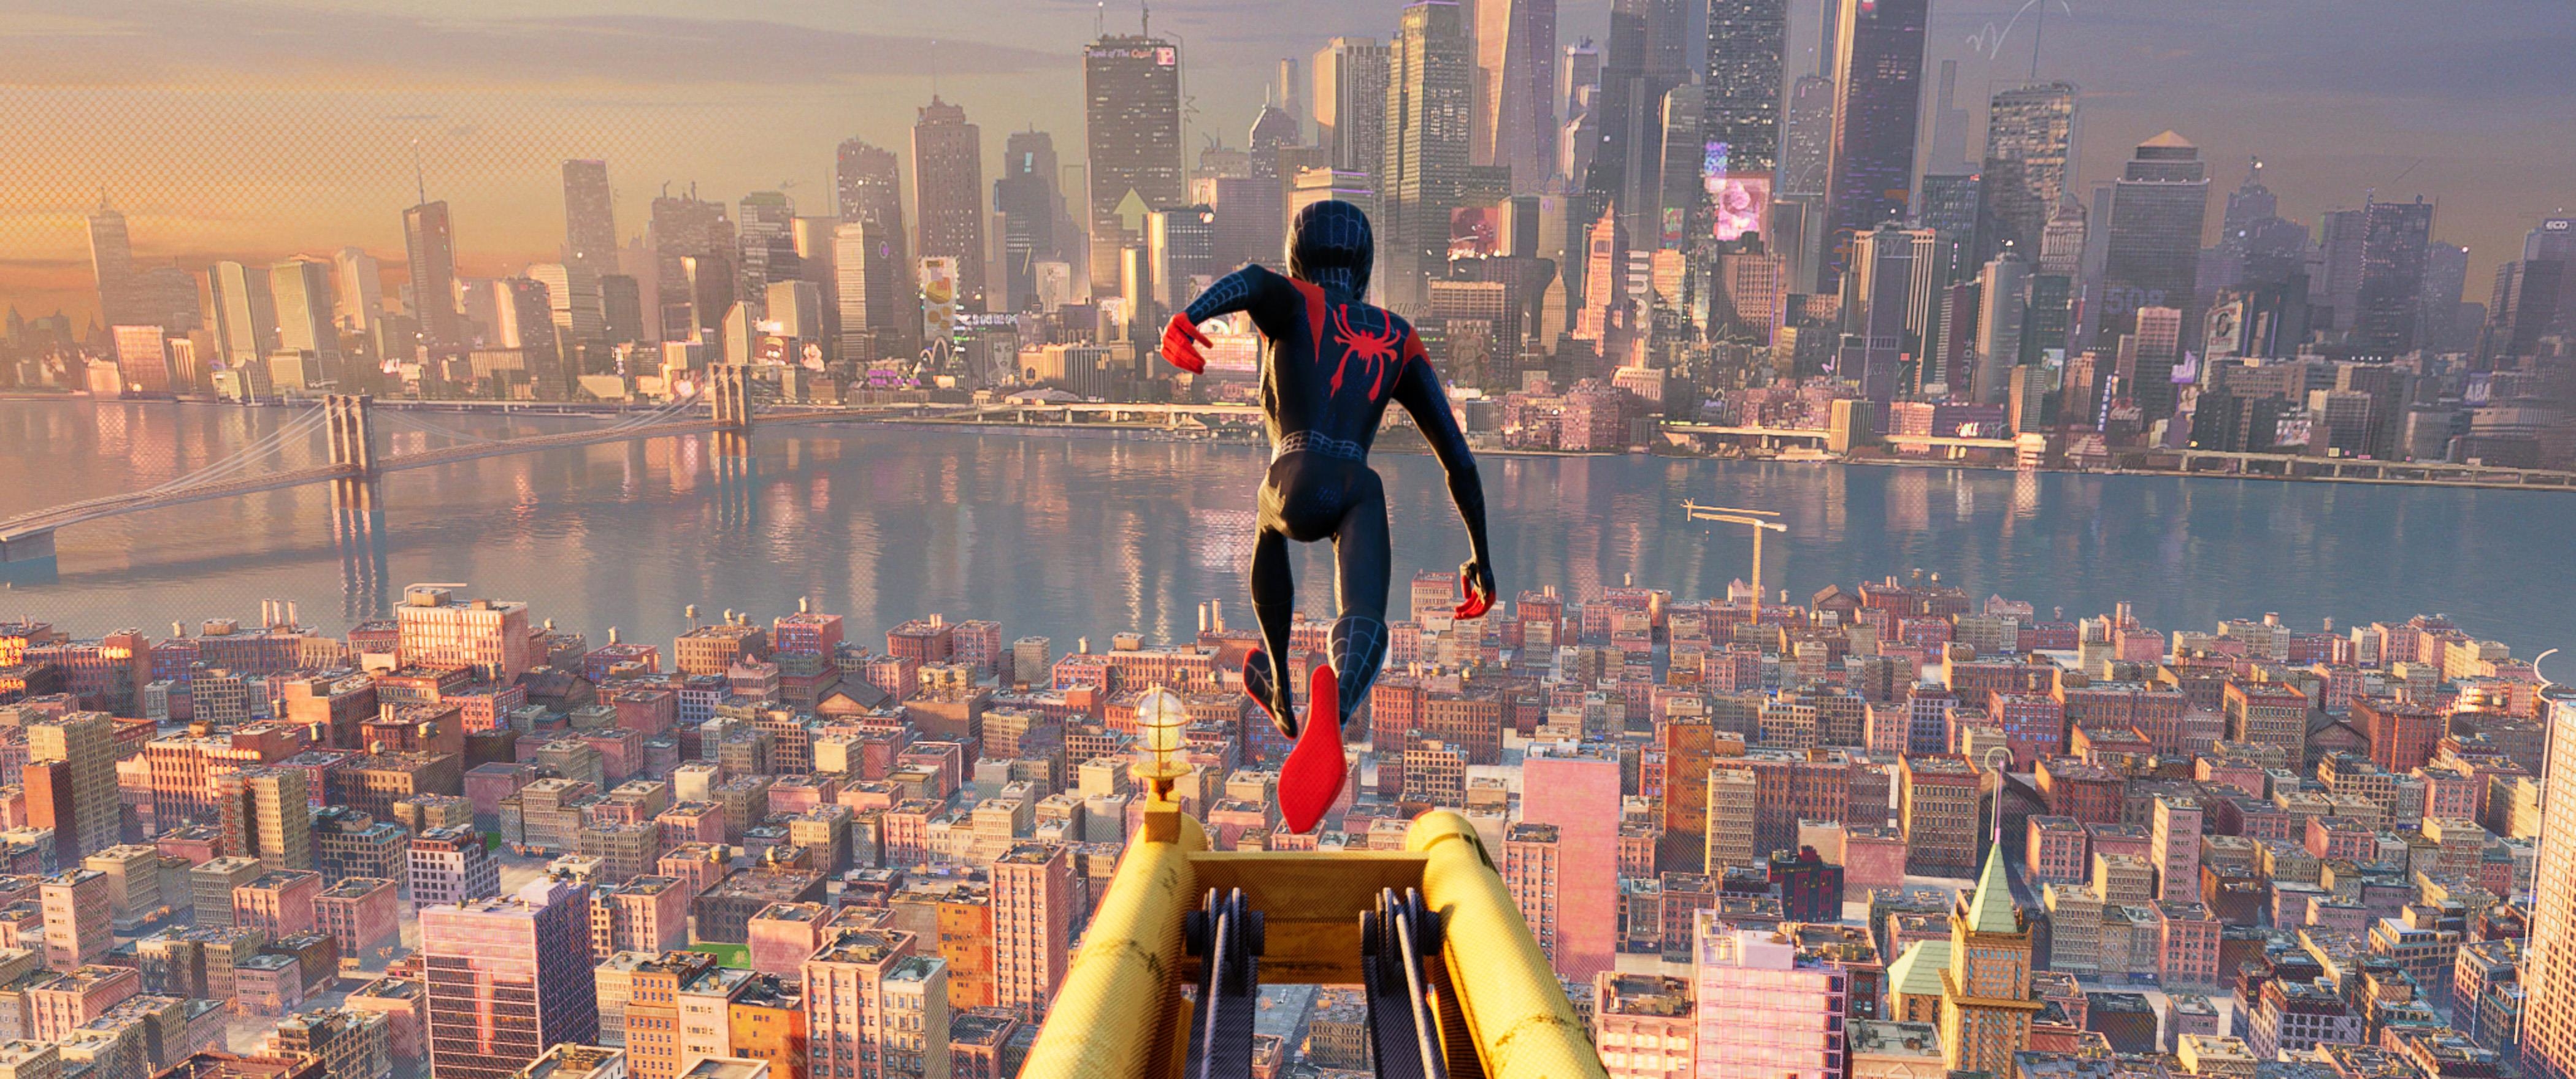 Image du film Spider-Man : New Generation 74306a71-0fdc-4a41-9759-669c942eb5ed